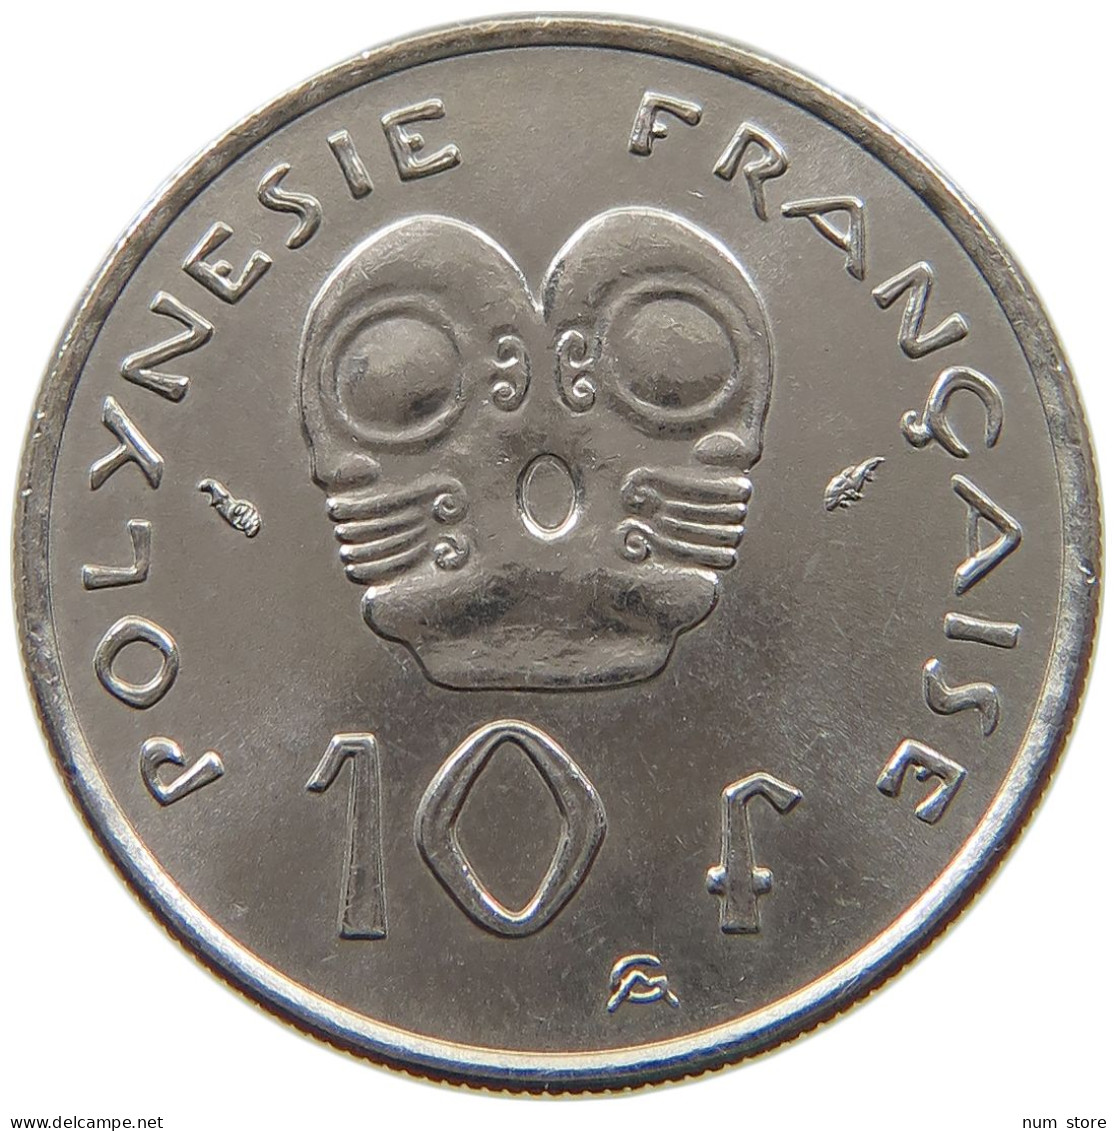 POLYNESIA 20 FRANCS 1979  #a031 0089 - Französisch-Polynesien